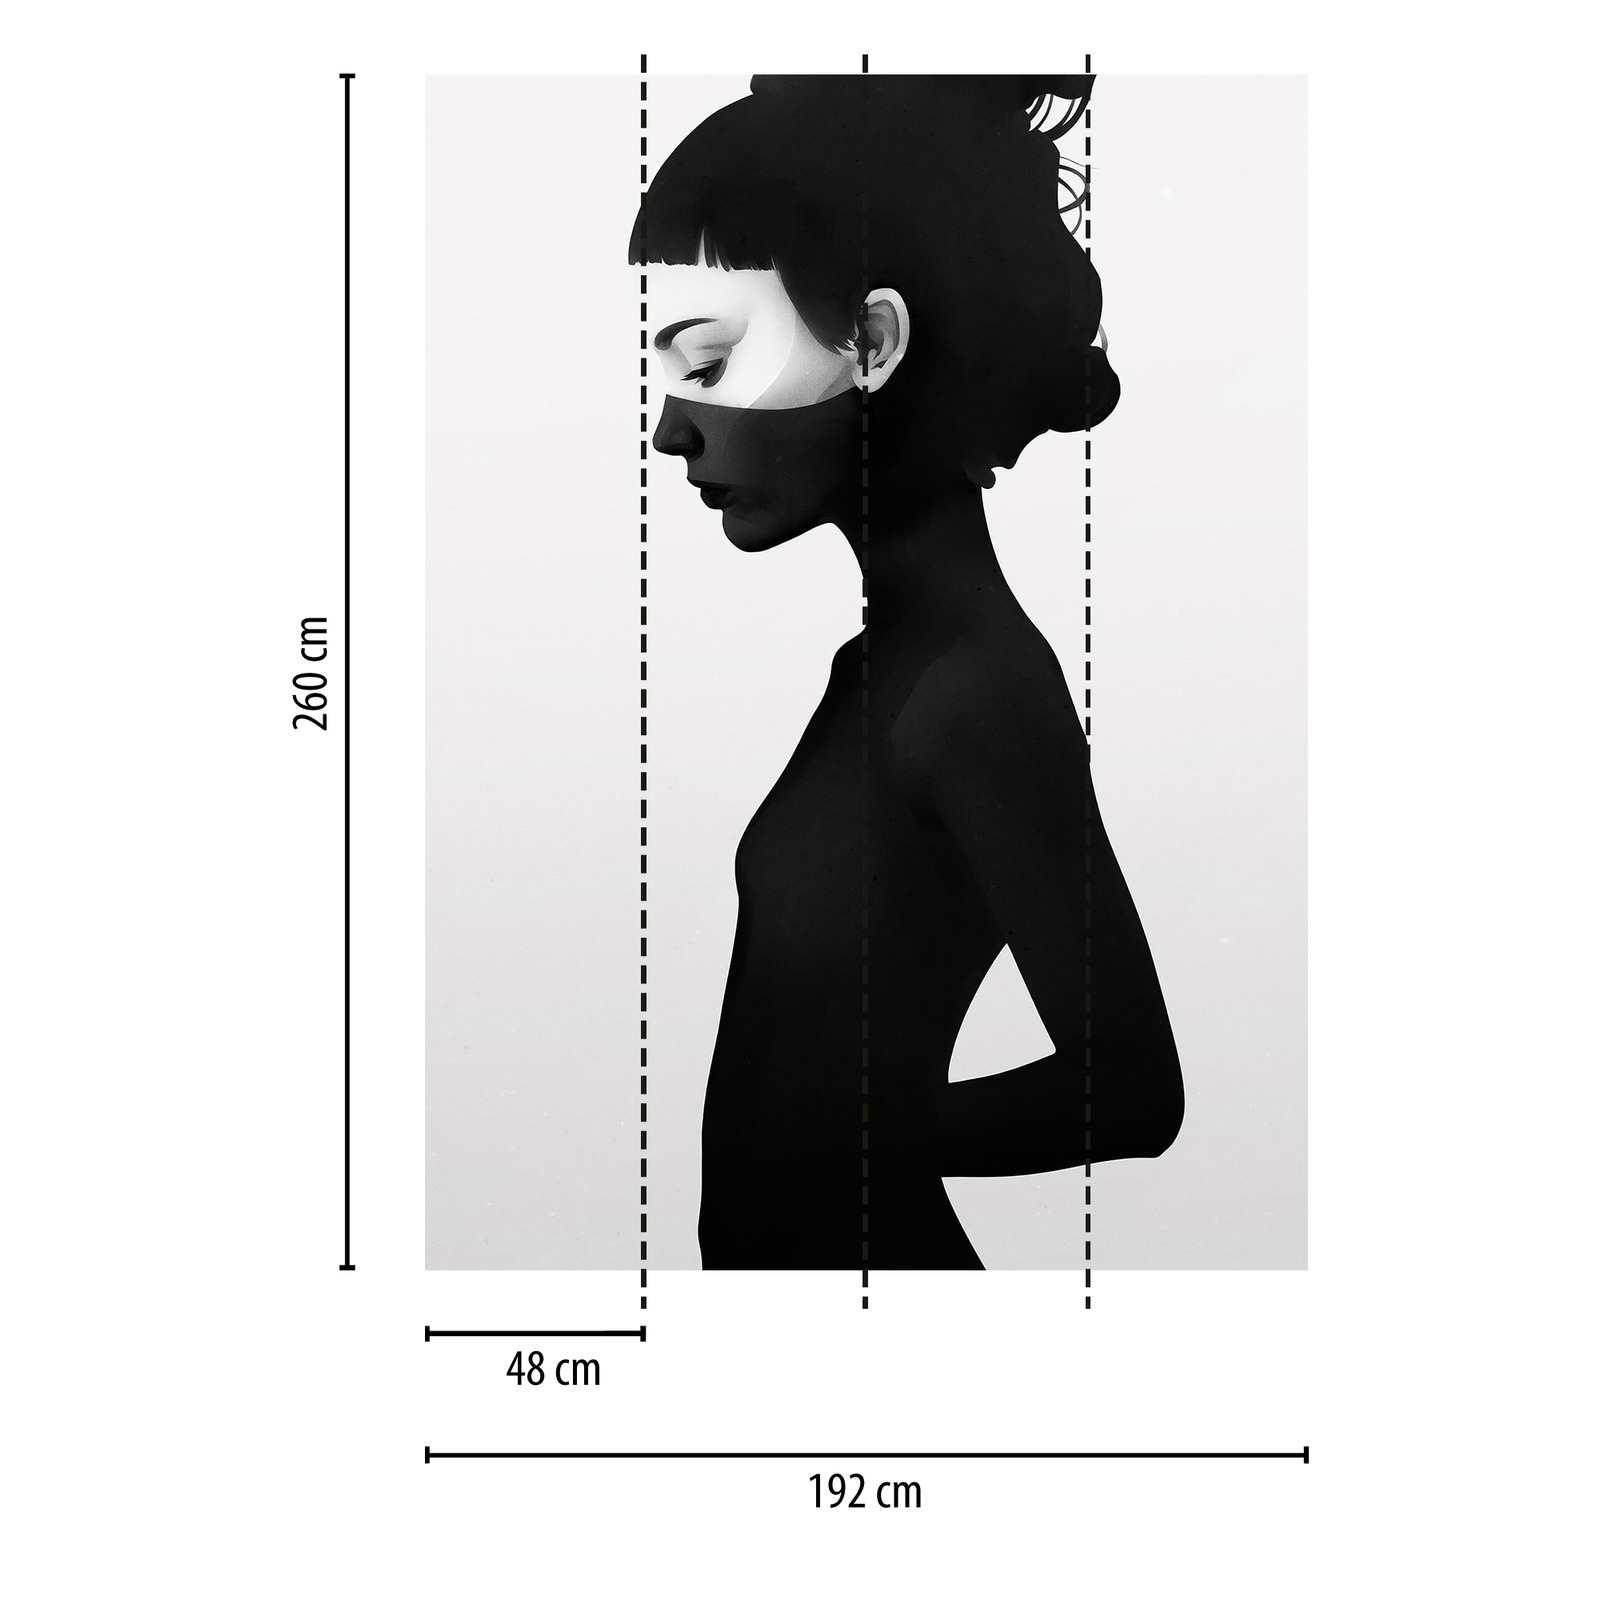             Narrow Model Behang - Zwart, Wit
        